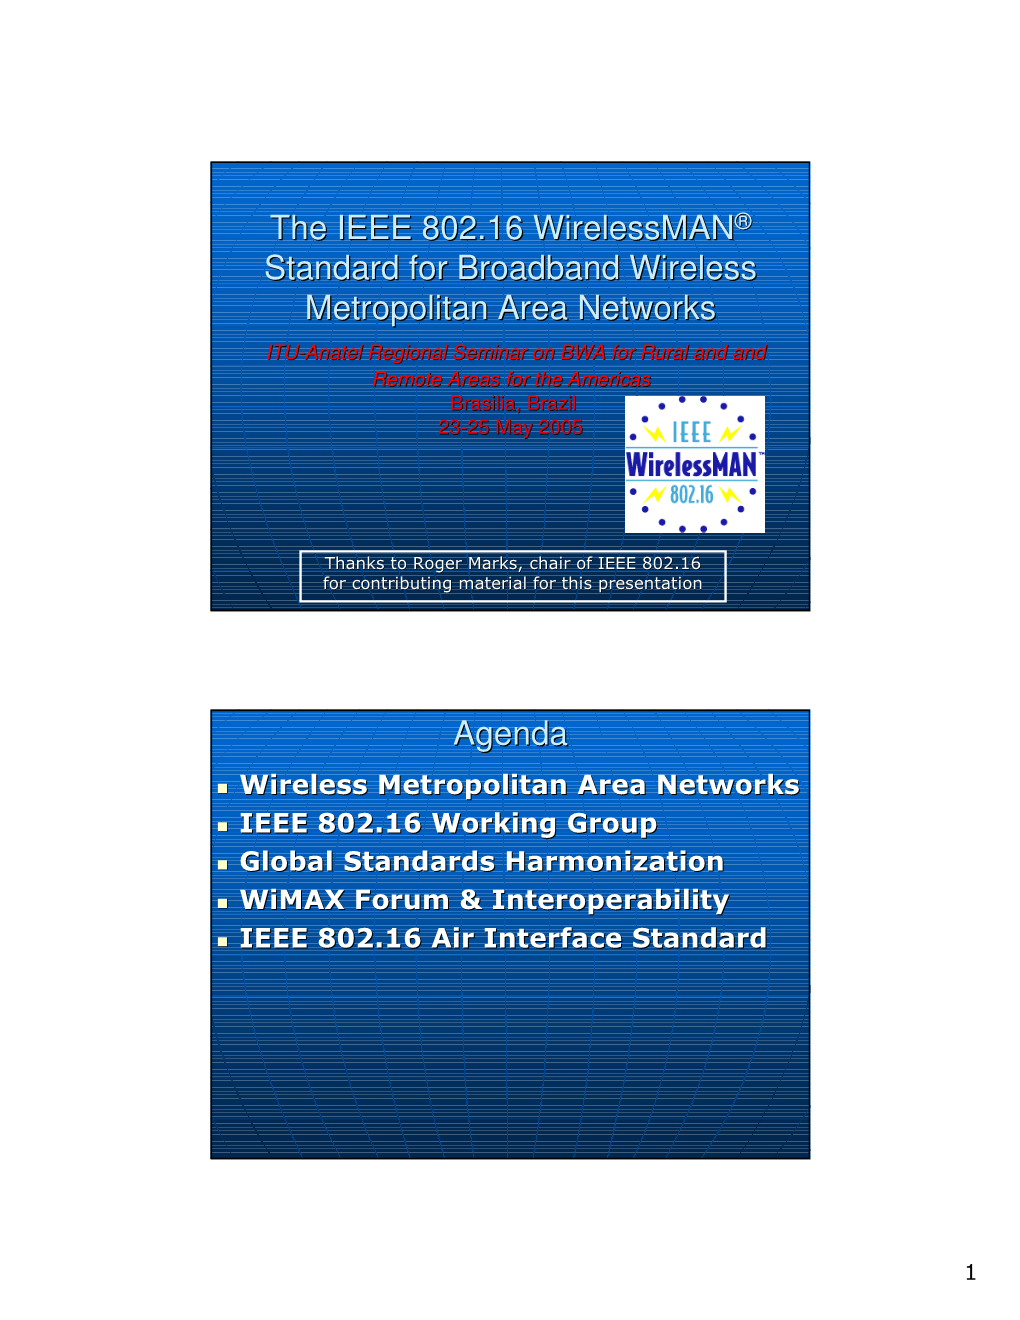 The IEEE 802.16 Wirelessman® Standard for Broadband Wireless Metropolitan Area Networks Agenda